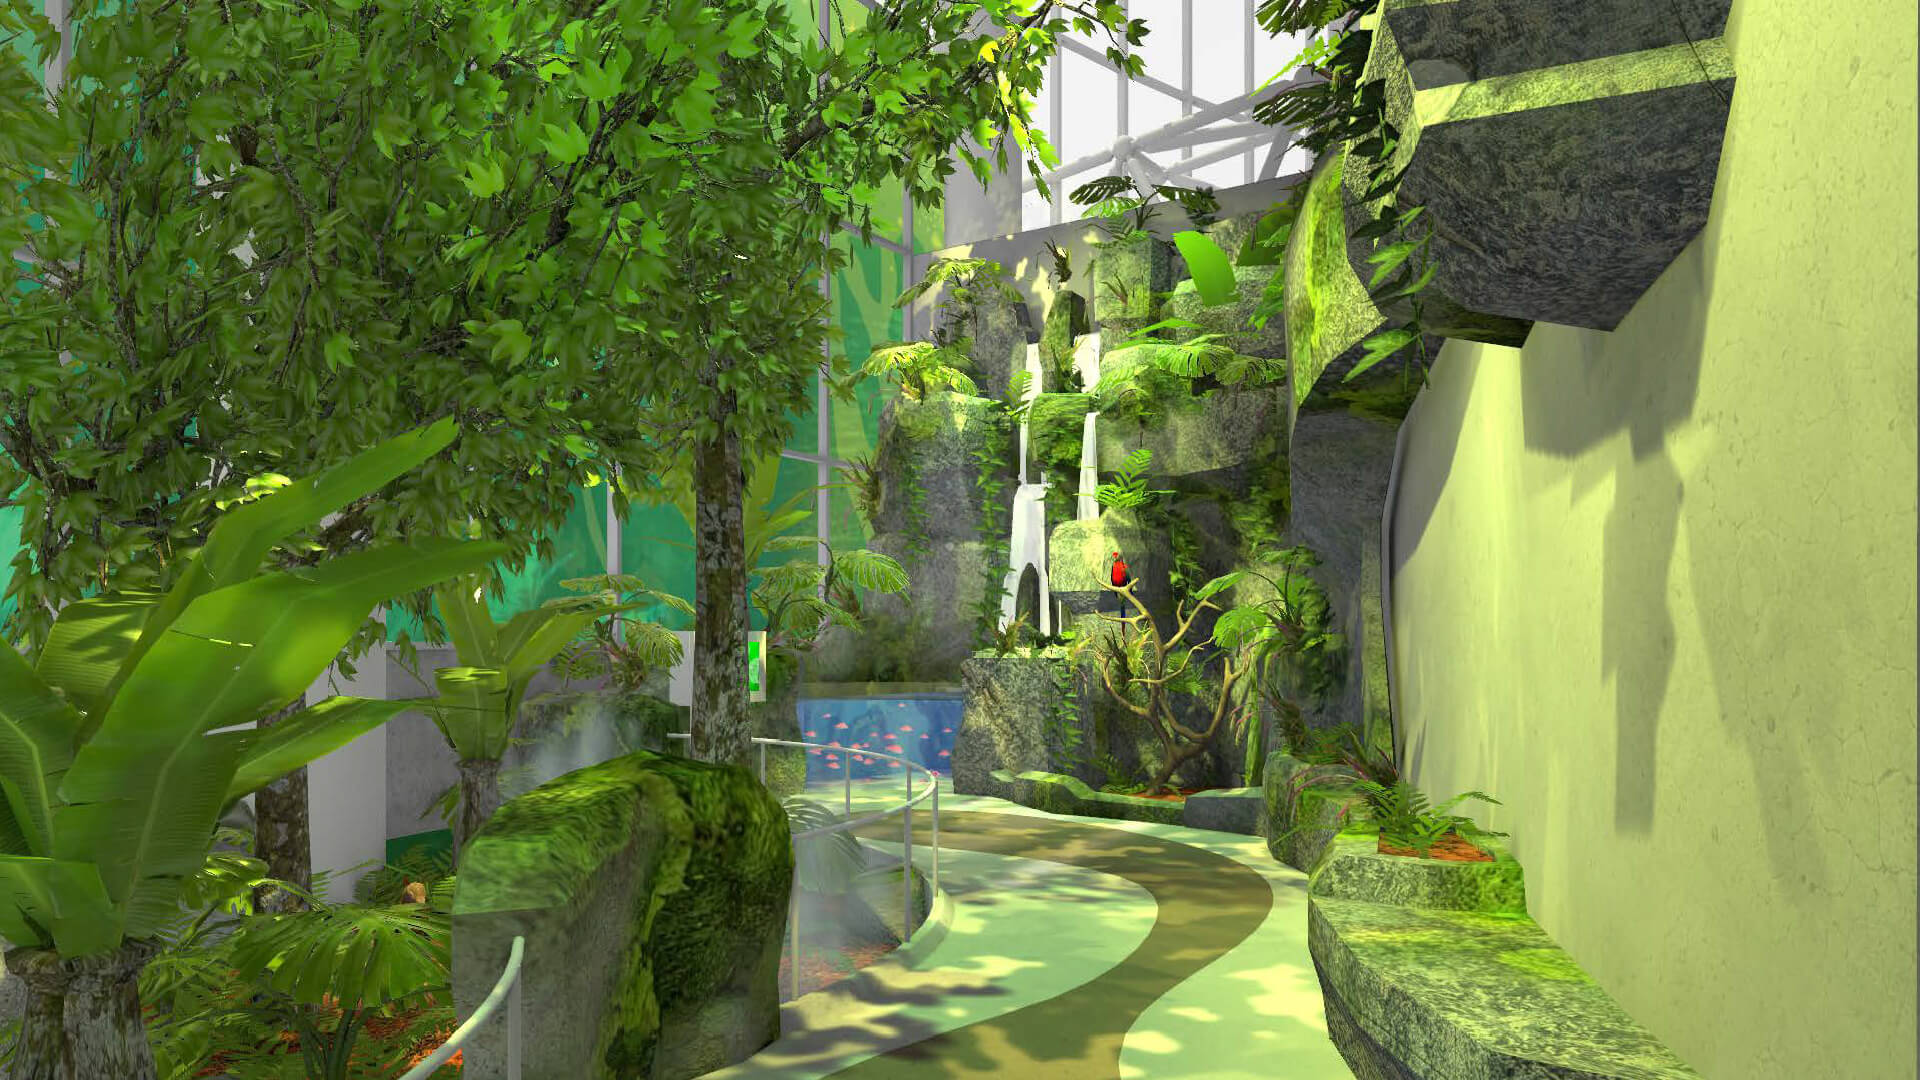 Life rainforest exhibit rendering